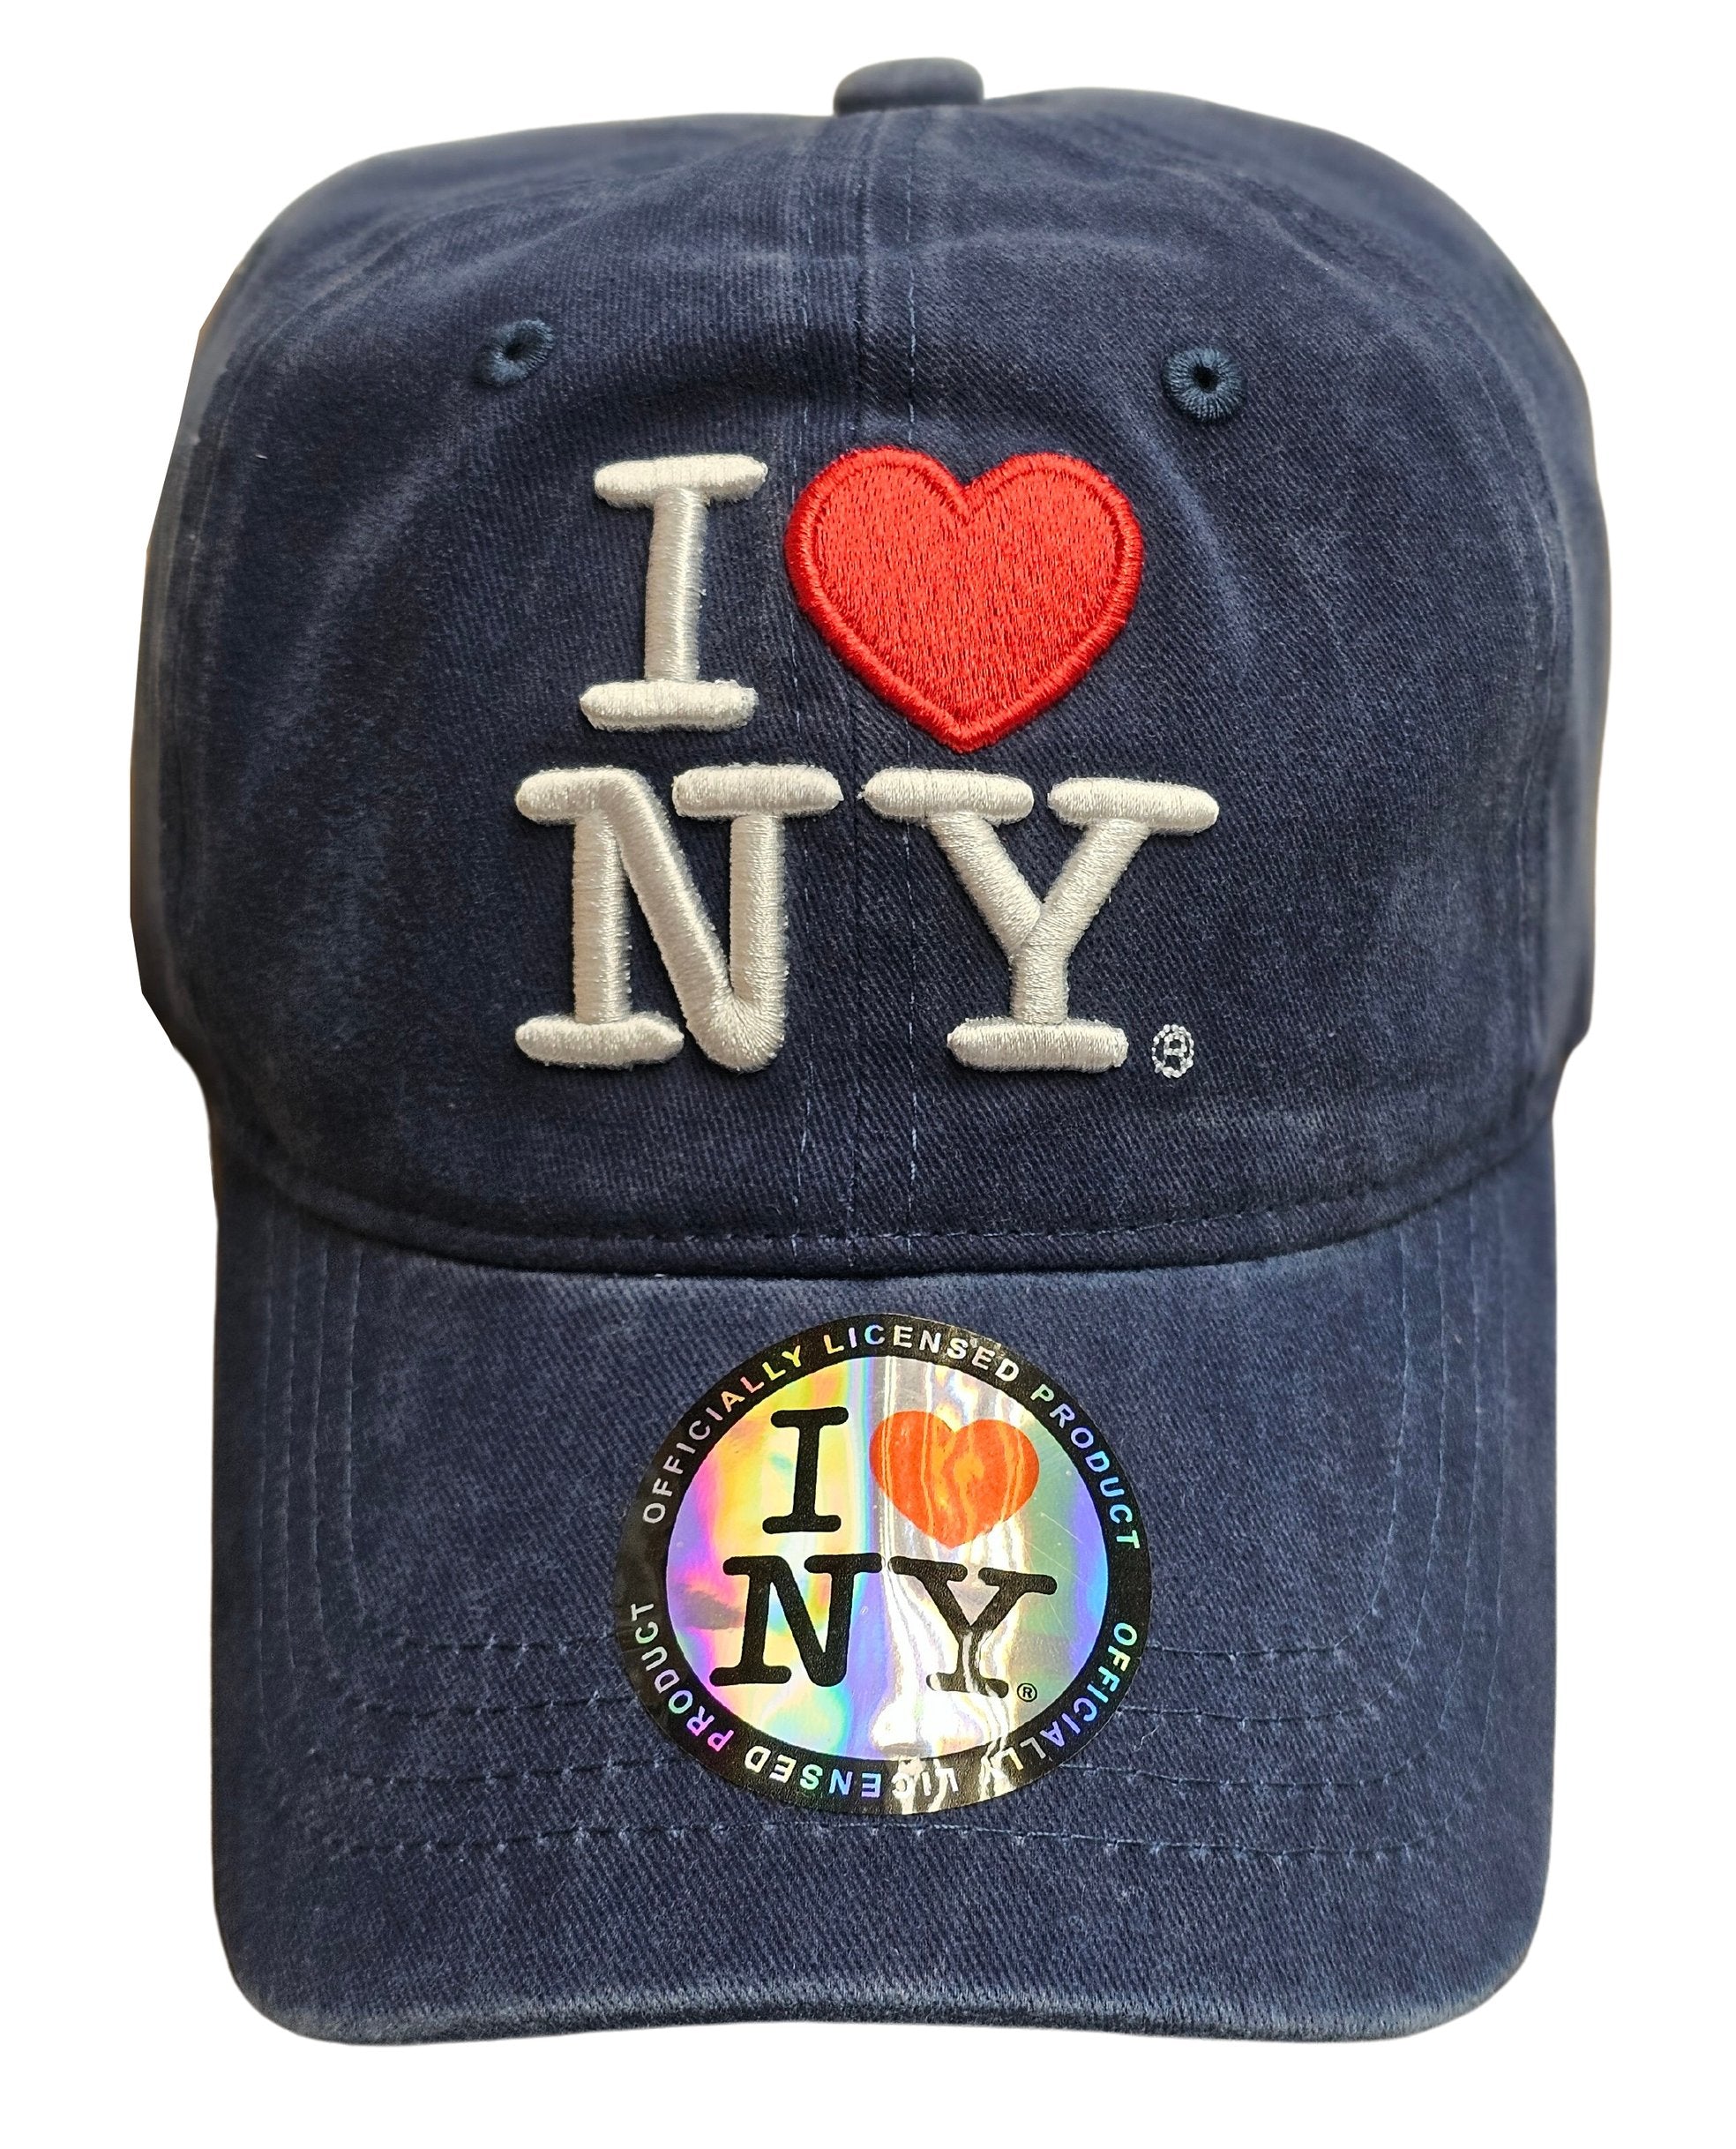 I Love NY Baseball Hat Denim Navy Adult One Size Cap